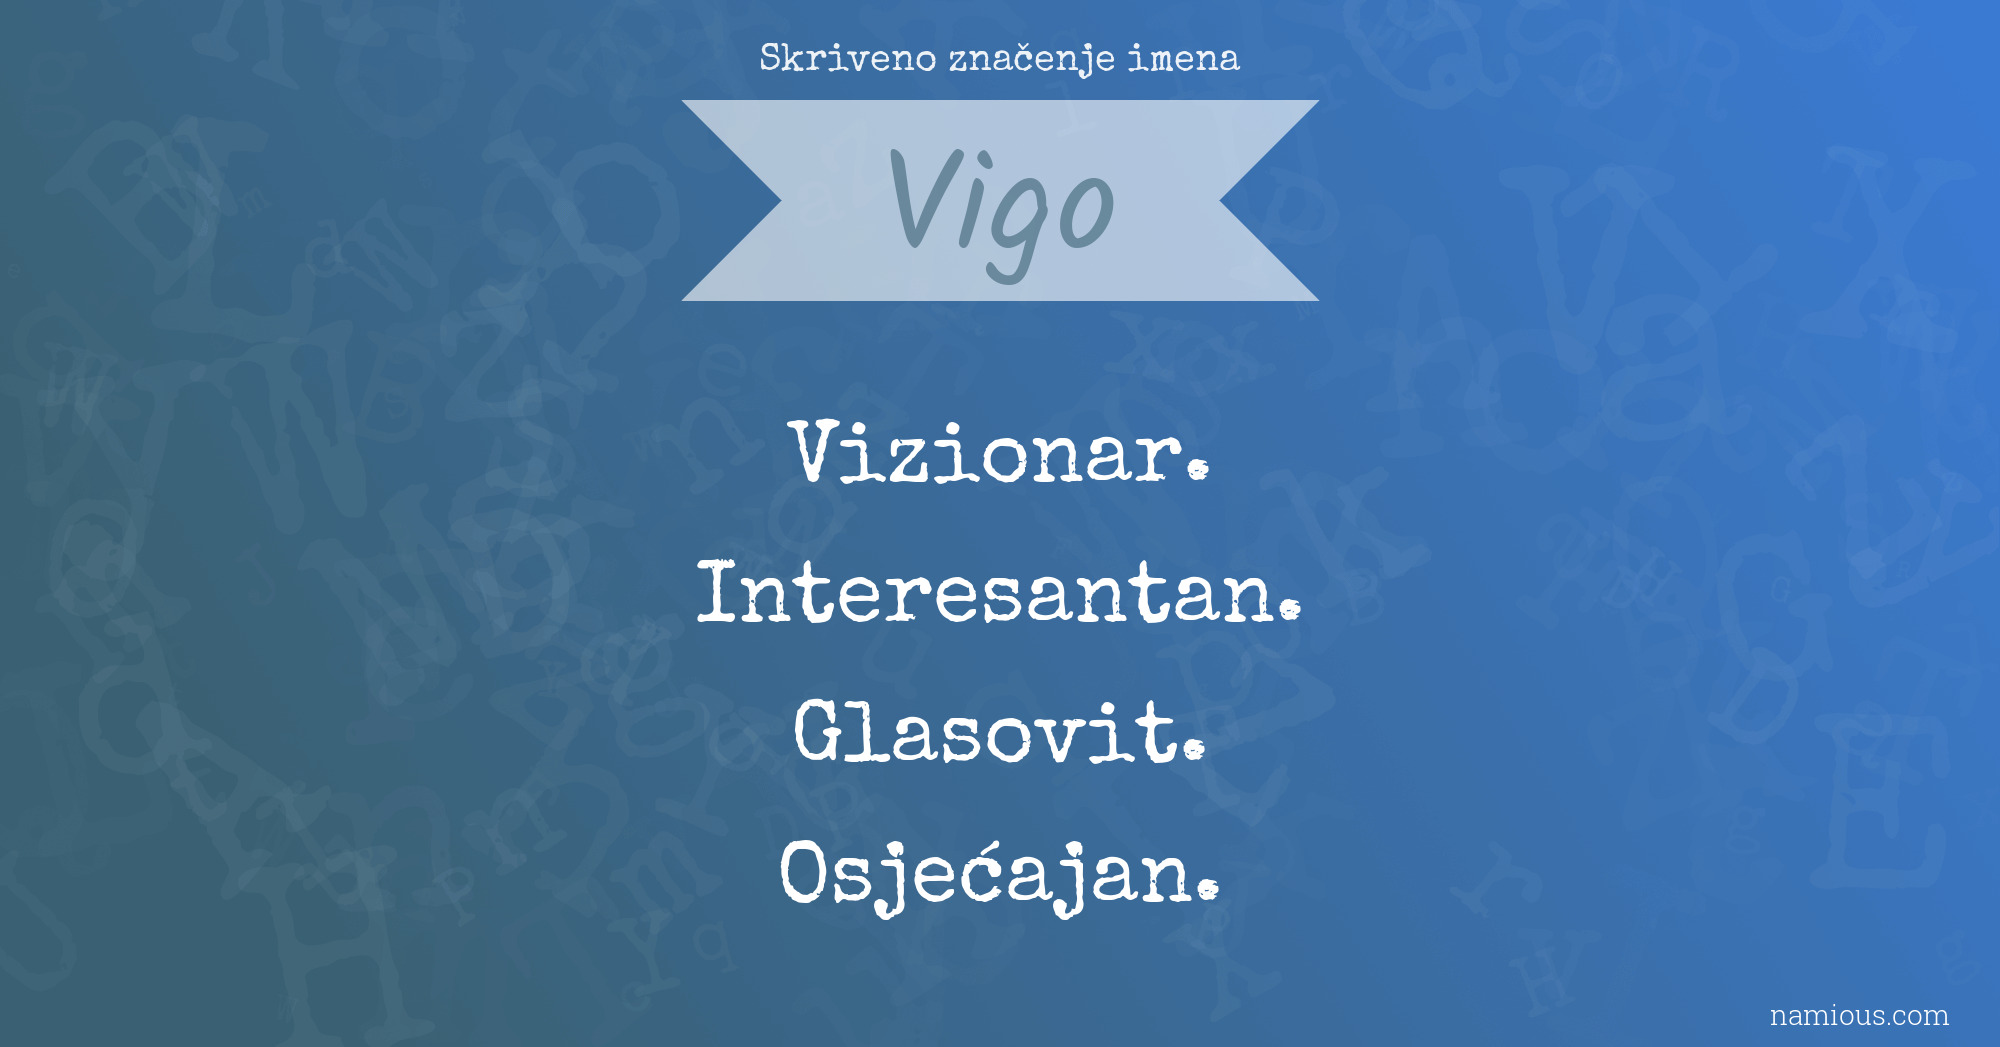 Skriveno značenje imena Vigo